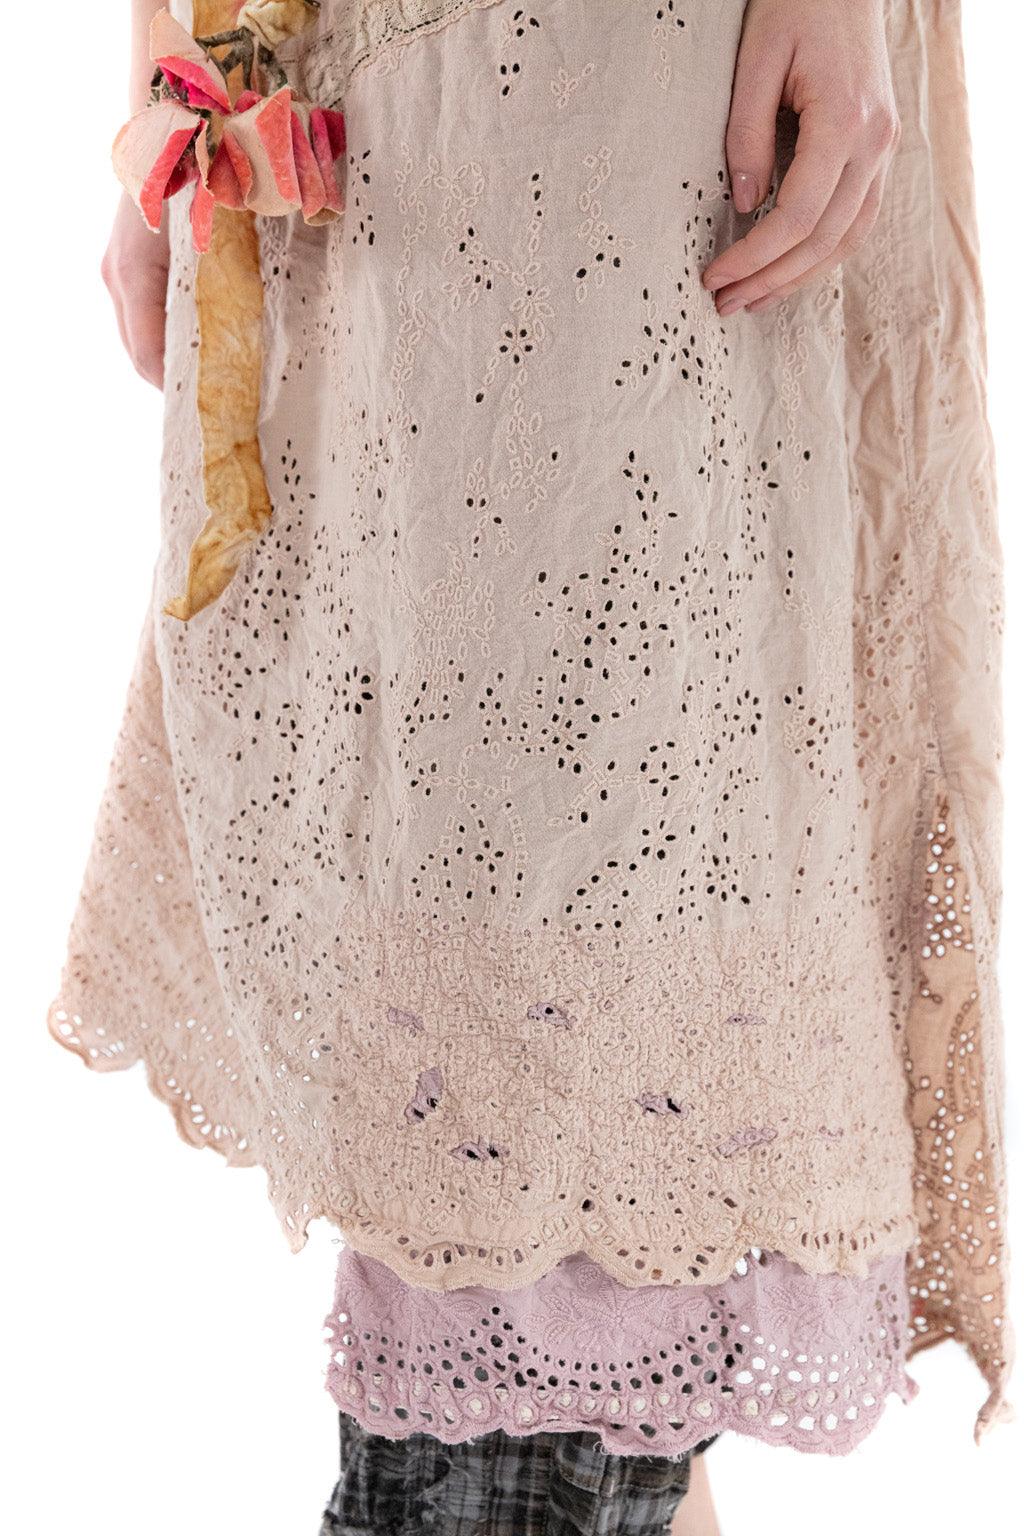 Eyelet Virgie Dress - Magnolia Pearl Clothing